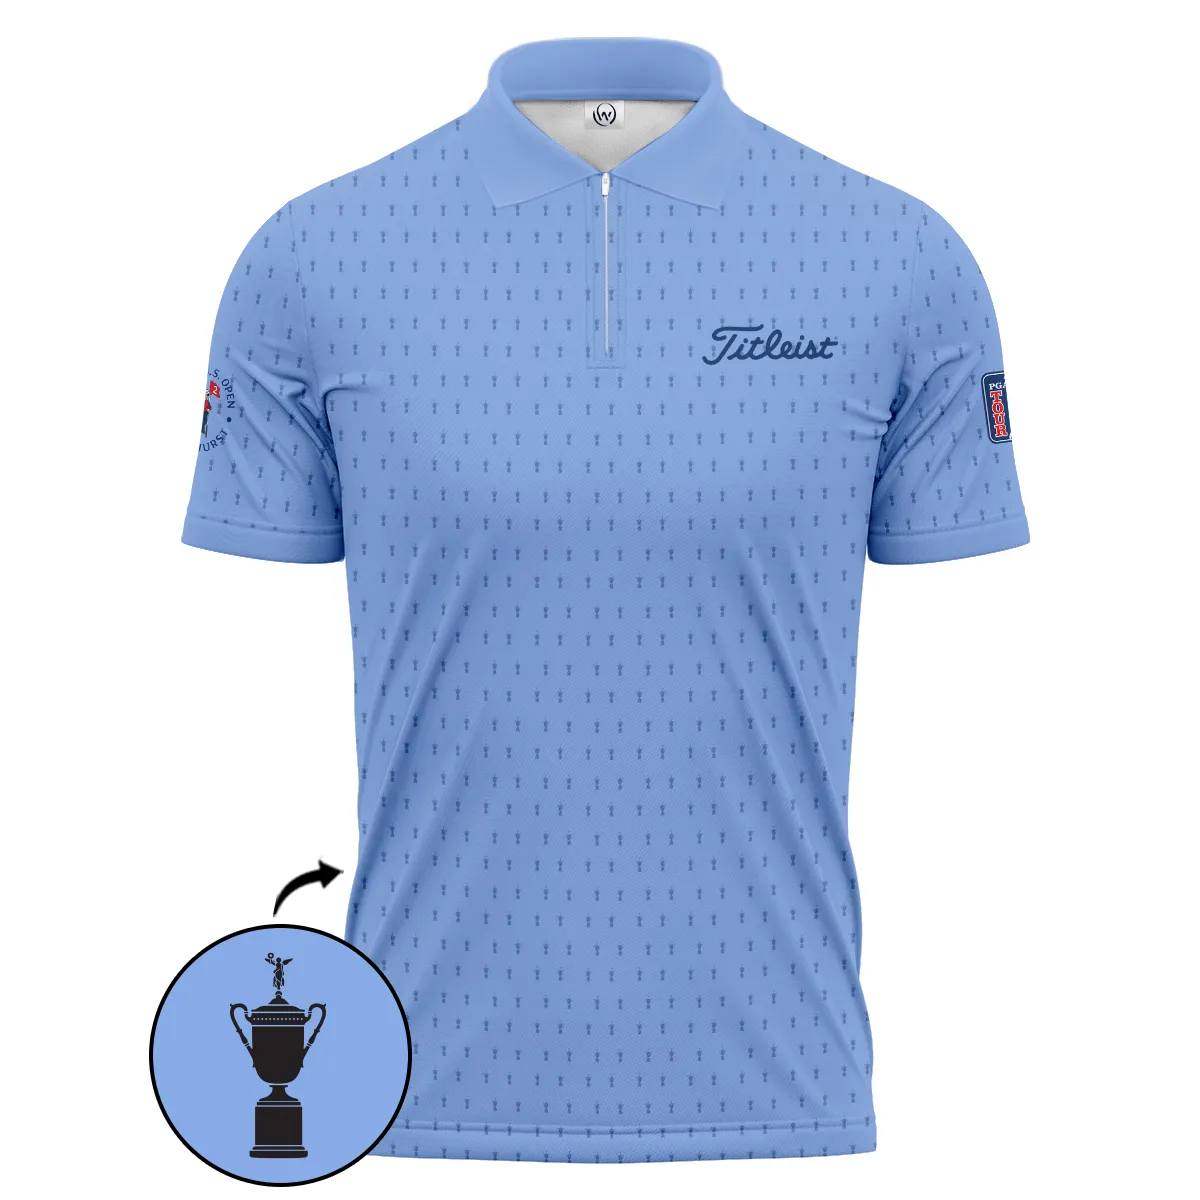 Golf Pattern Cup Blue 124th U.S. Open Pinehurst Pinehurst Titleist Zipper Polo Shirt Style Classic